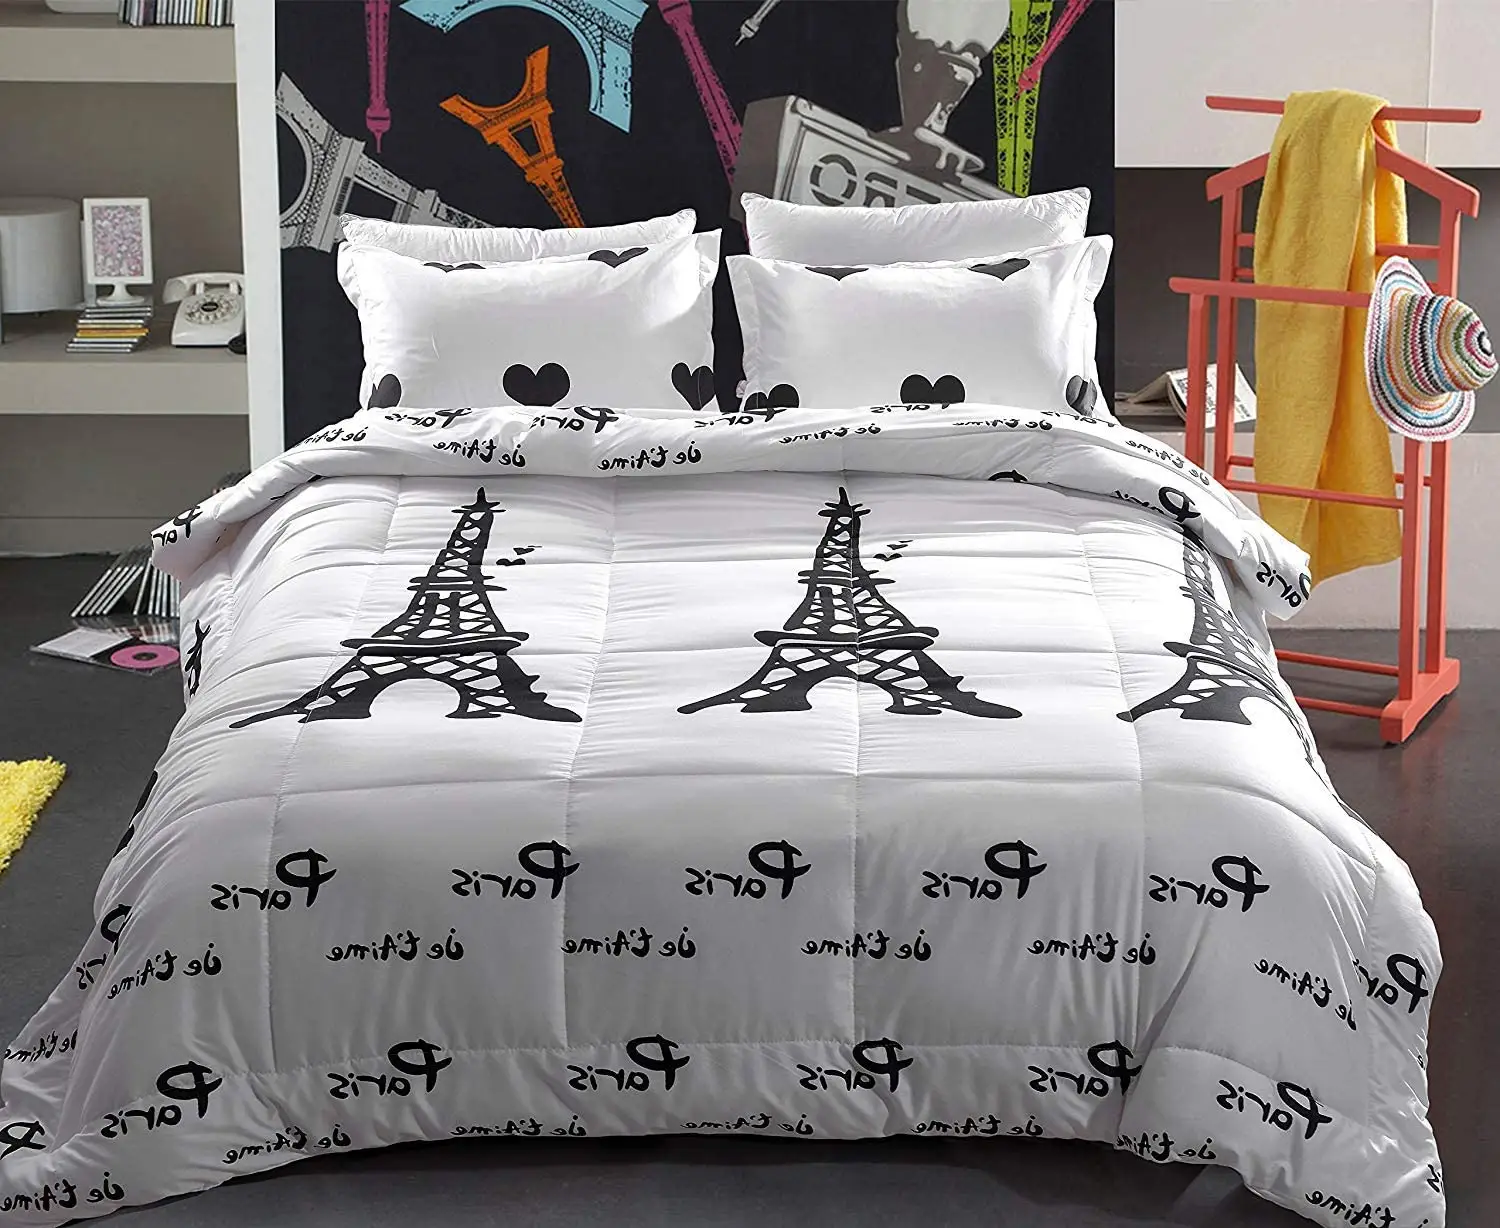 Printed Polyester Comforter Bedding Sets